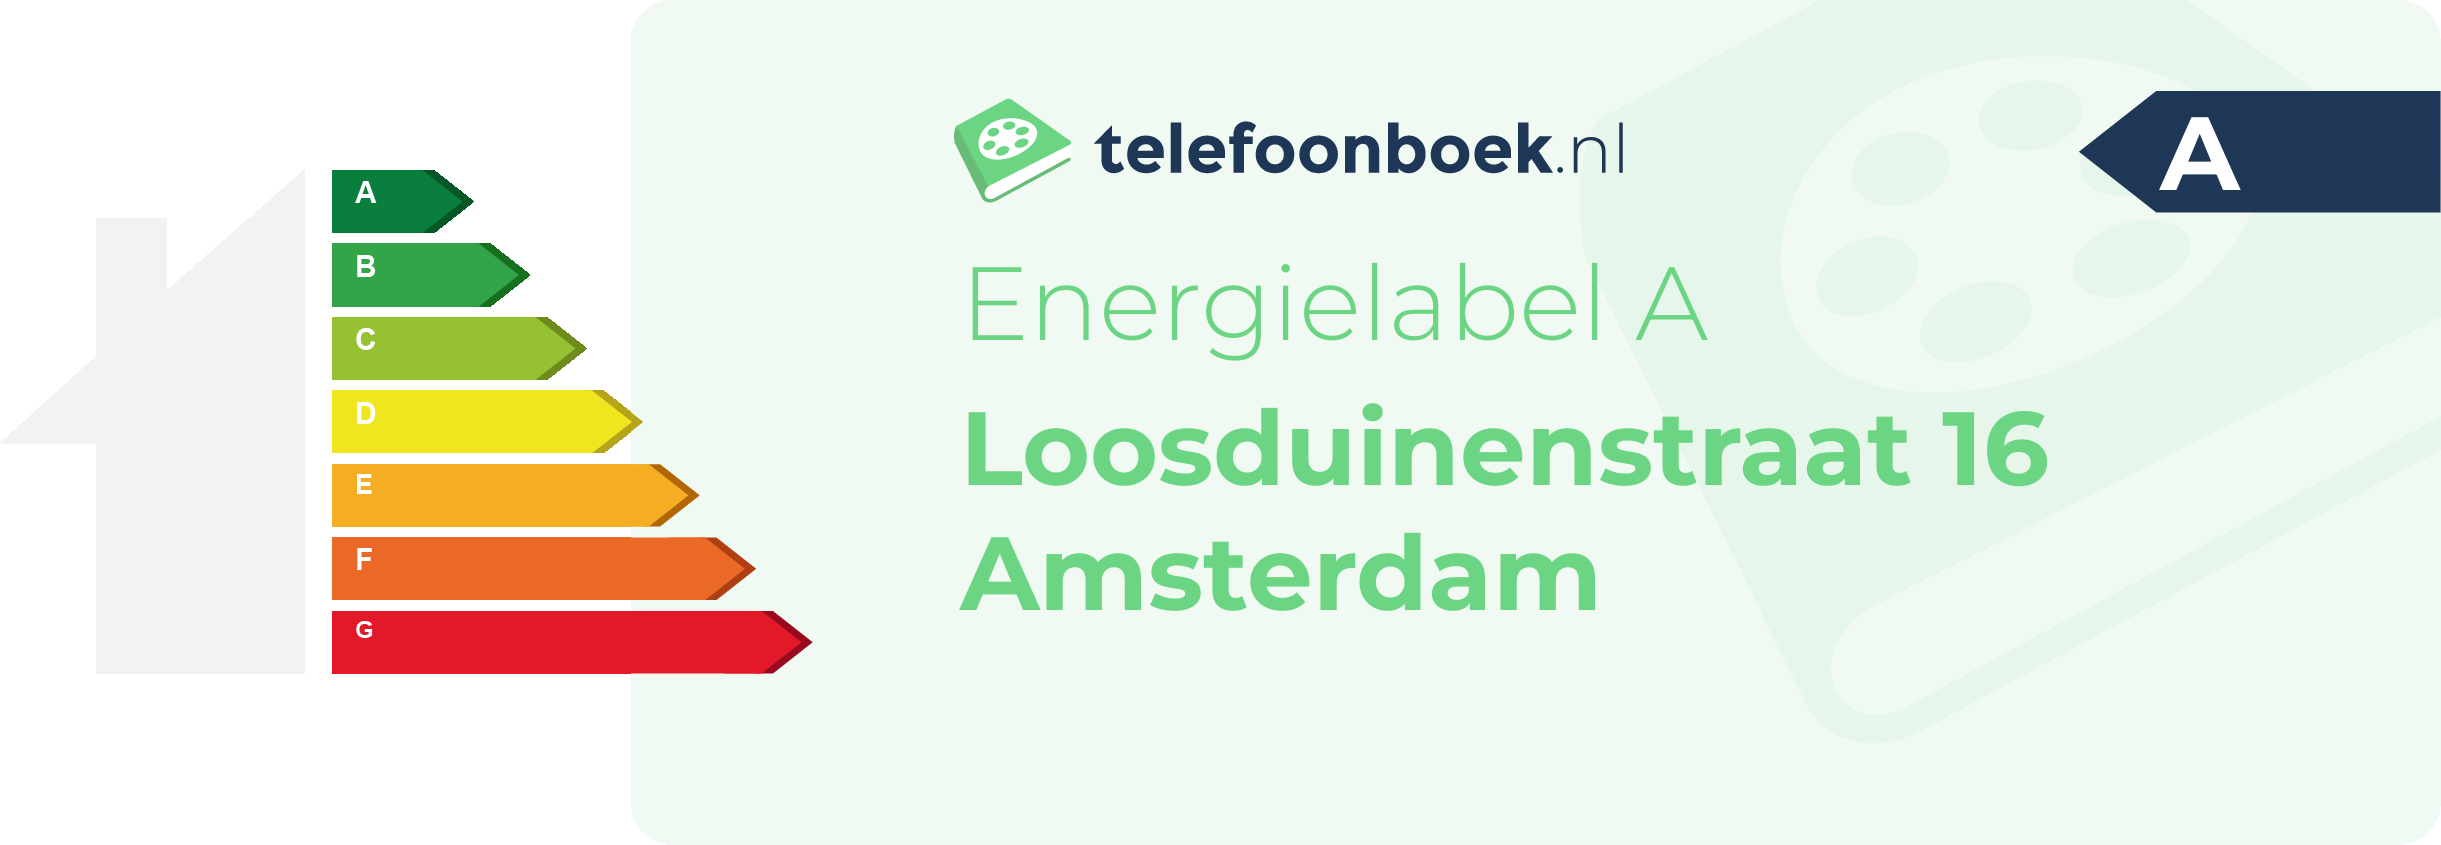 Energielabel Loosduinenstraat 16 Amsterdam